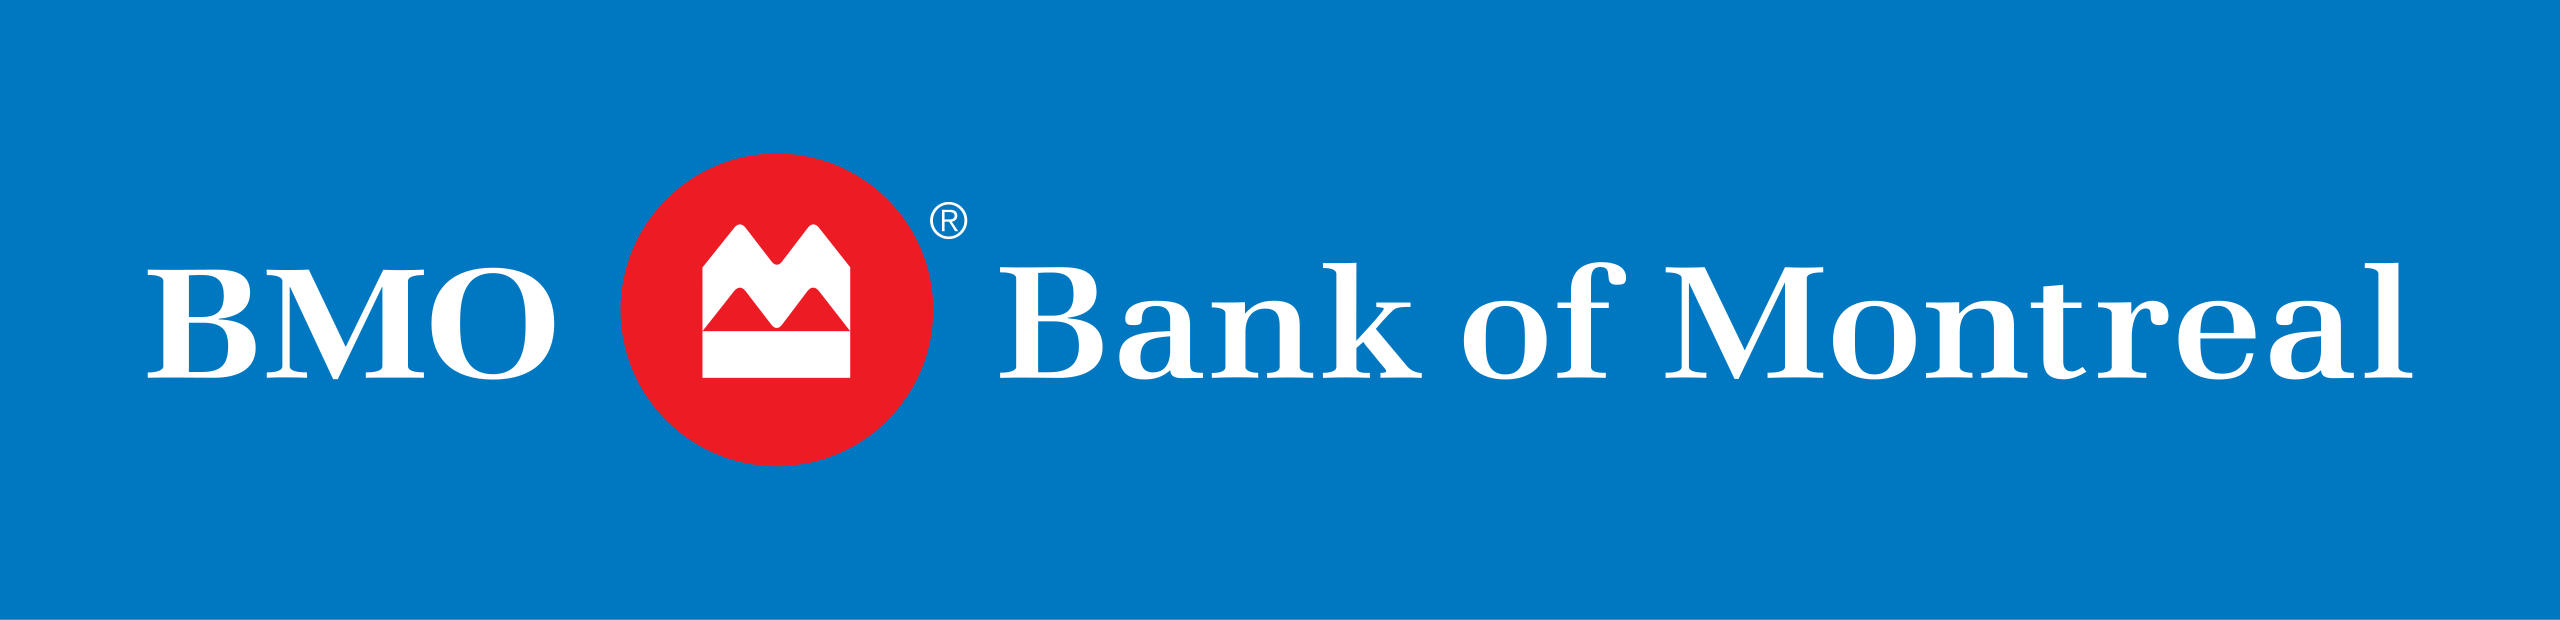 bmo bank wiki